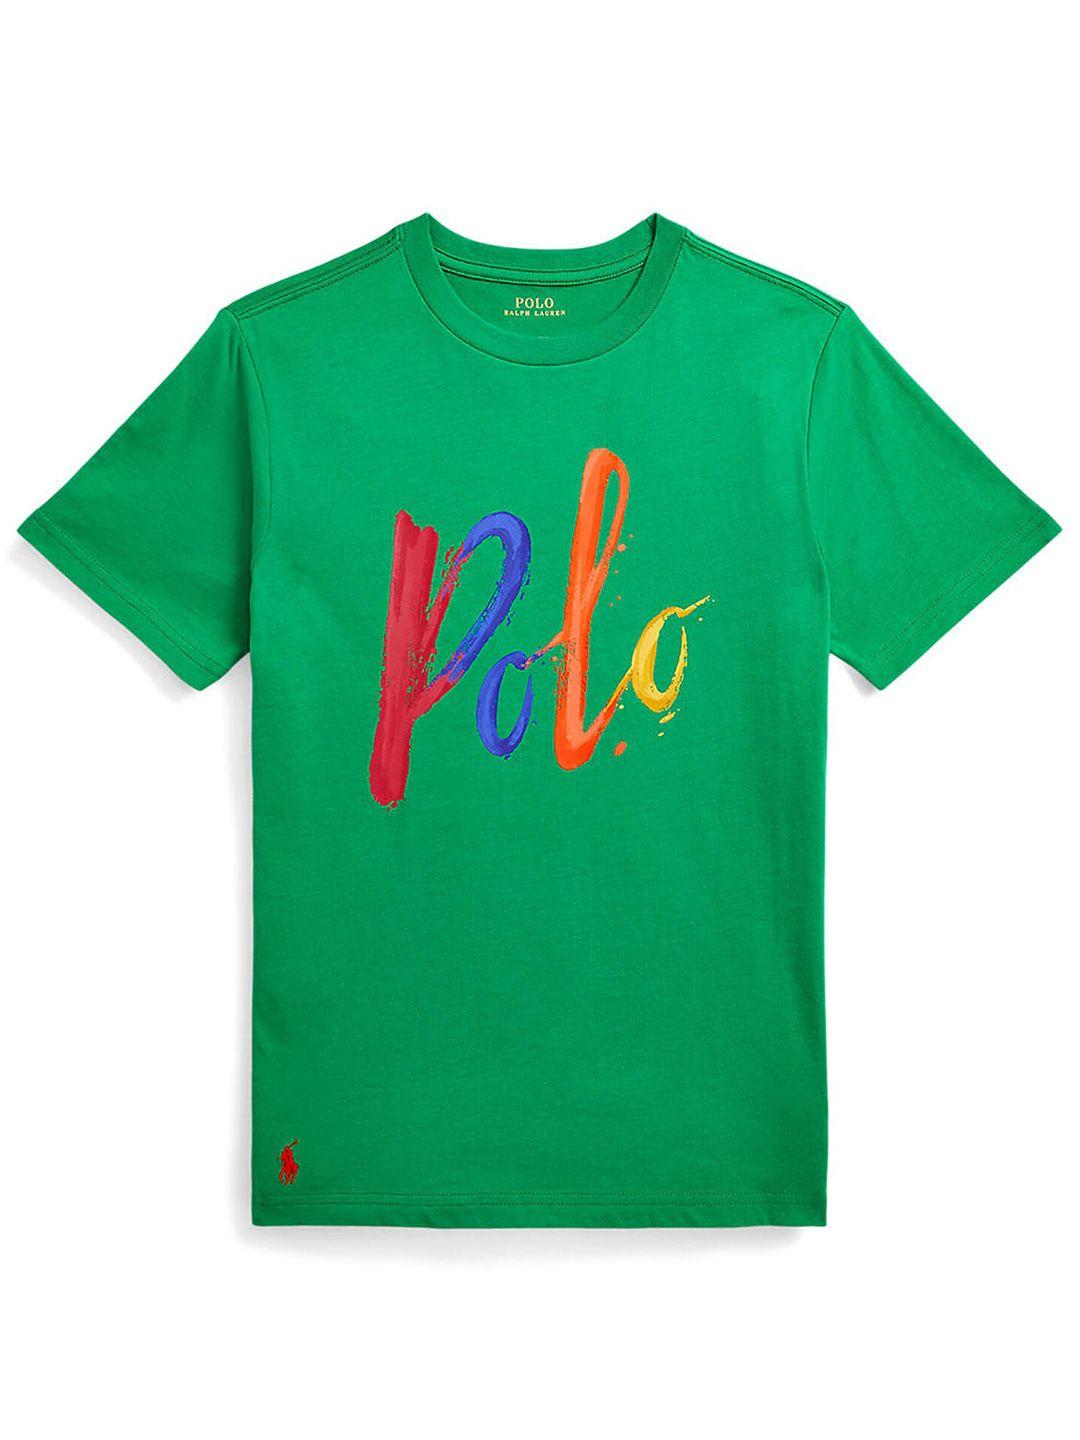 polo ralph lauren boys printed cotton jersey t-shirt